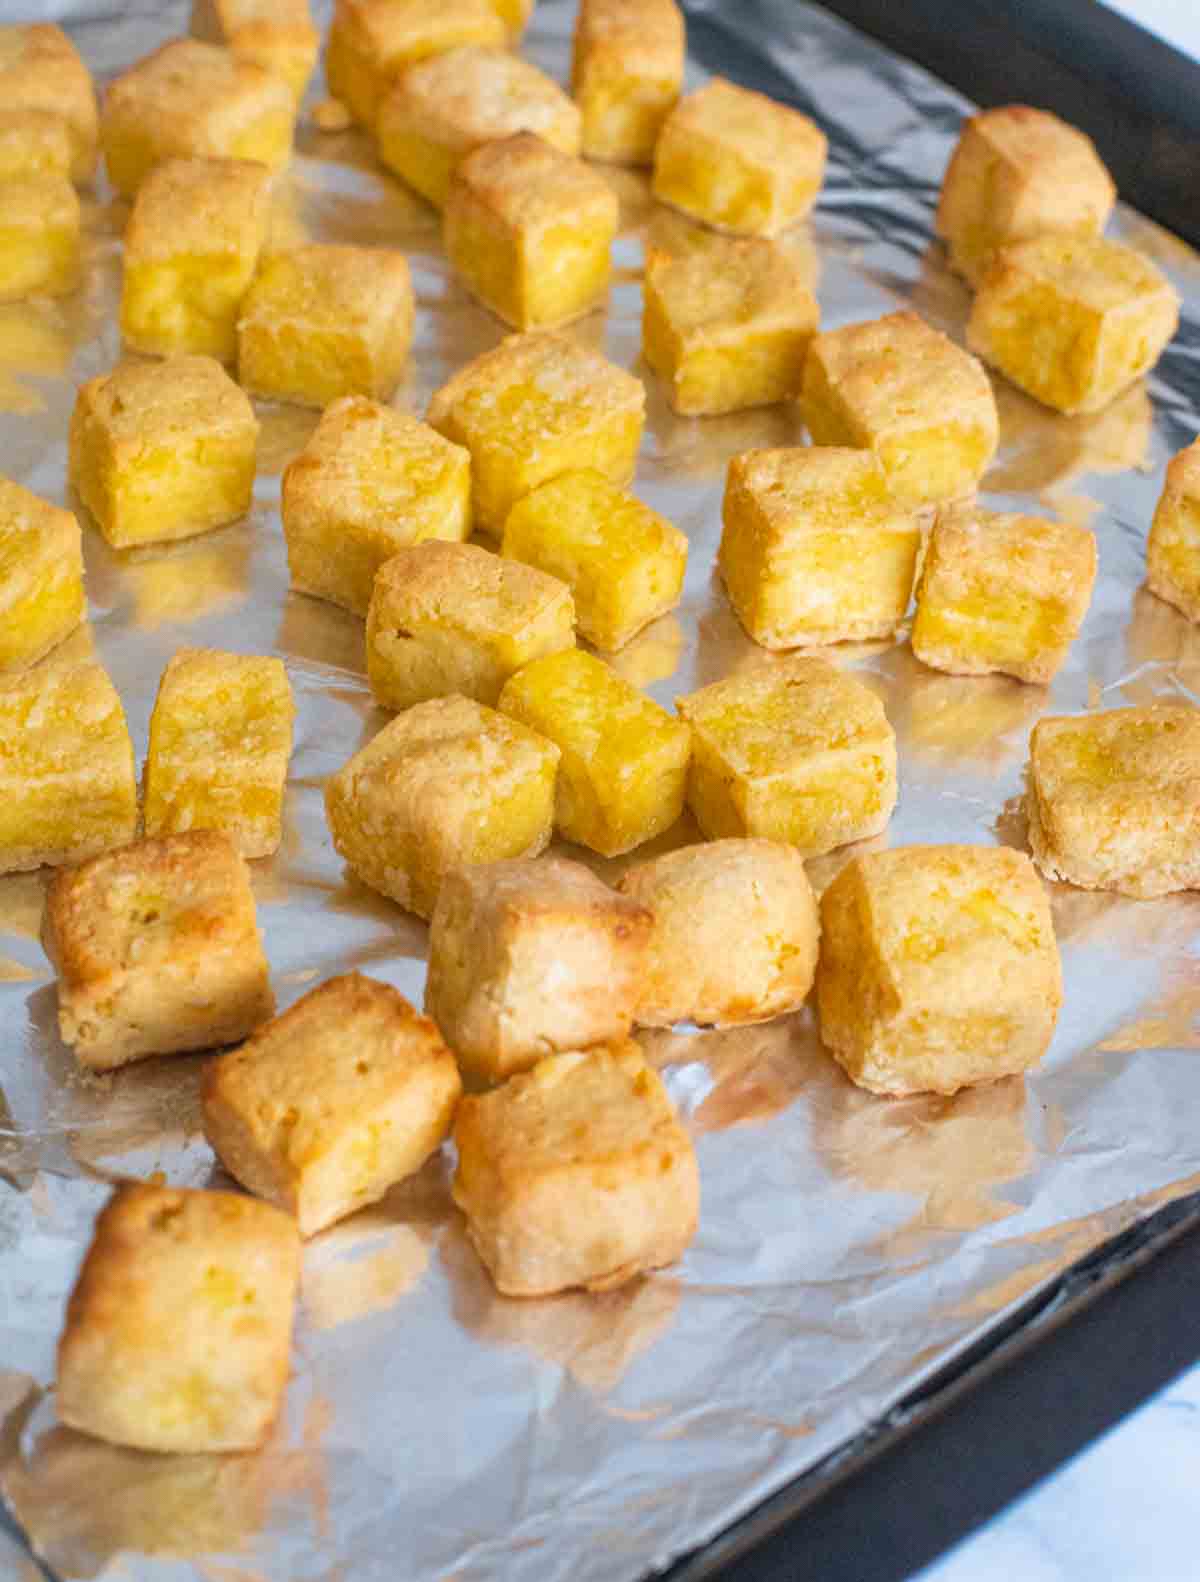 Crispy baked Tofu pieces on a baking sheet